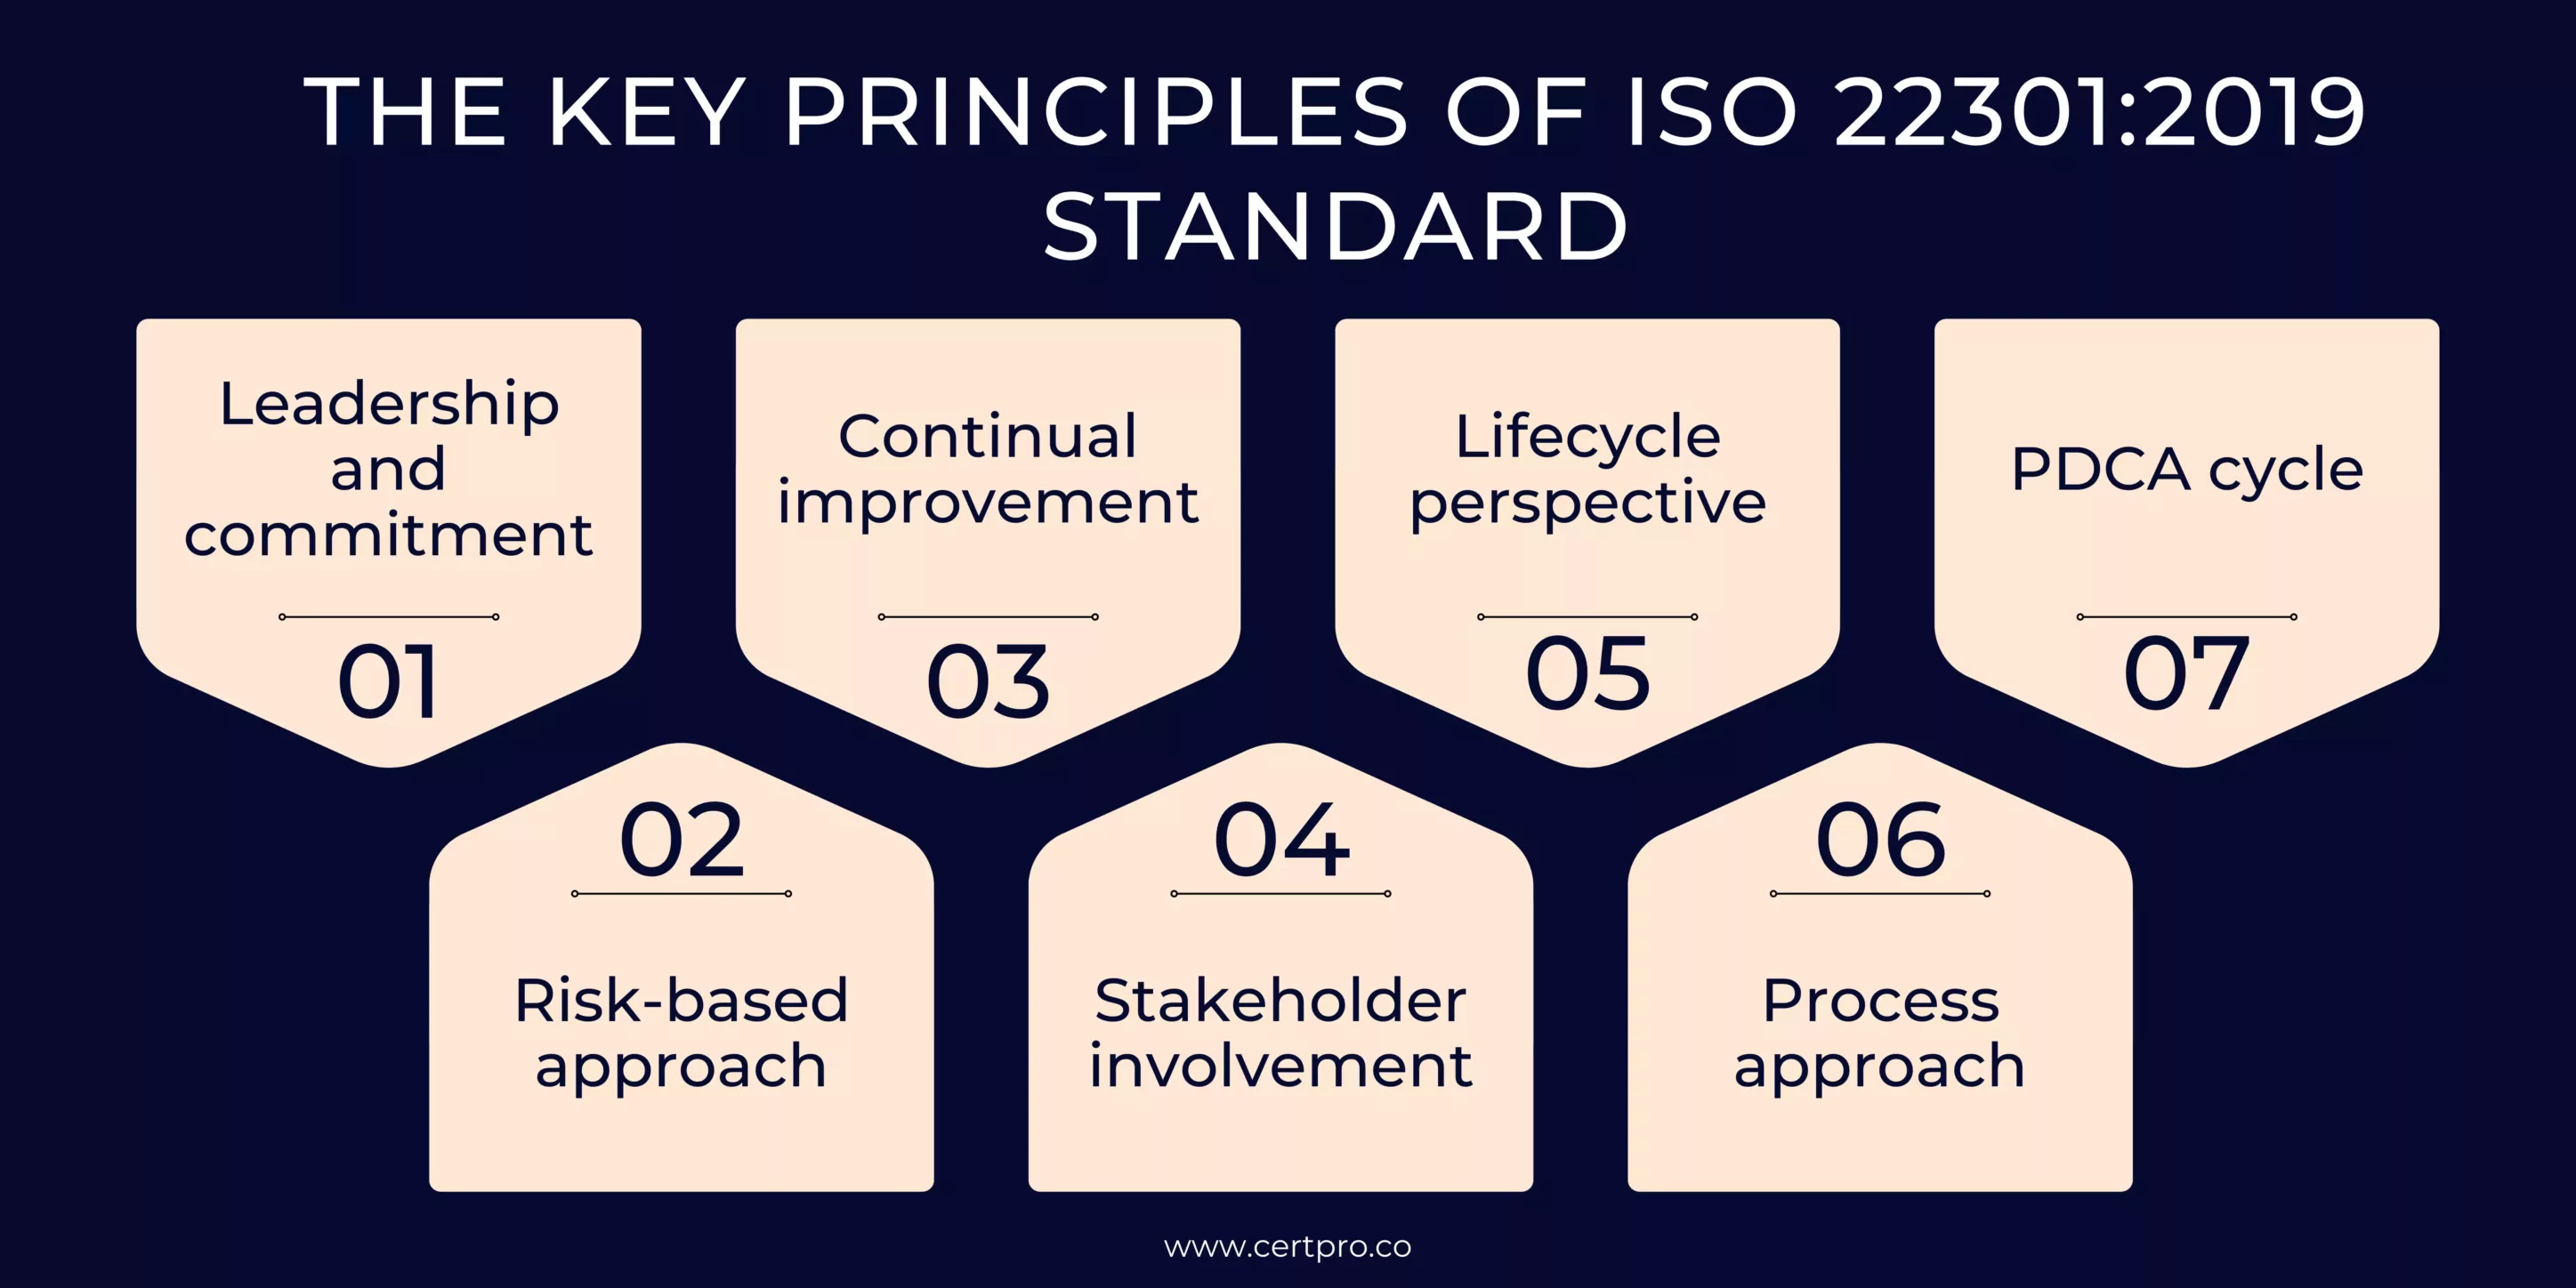 KEY PRINCIPLES OF ISO 22301